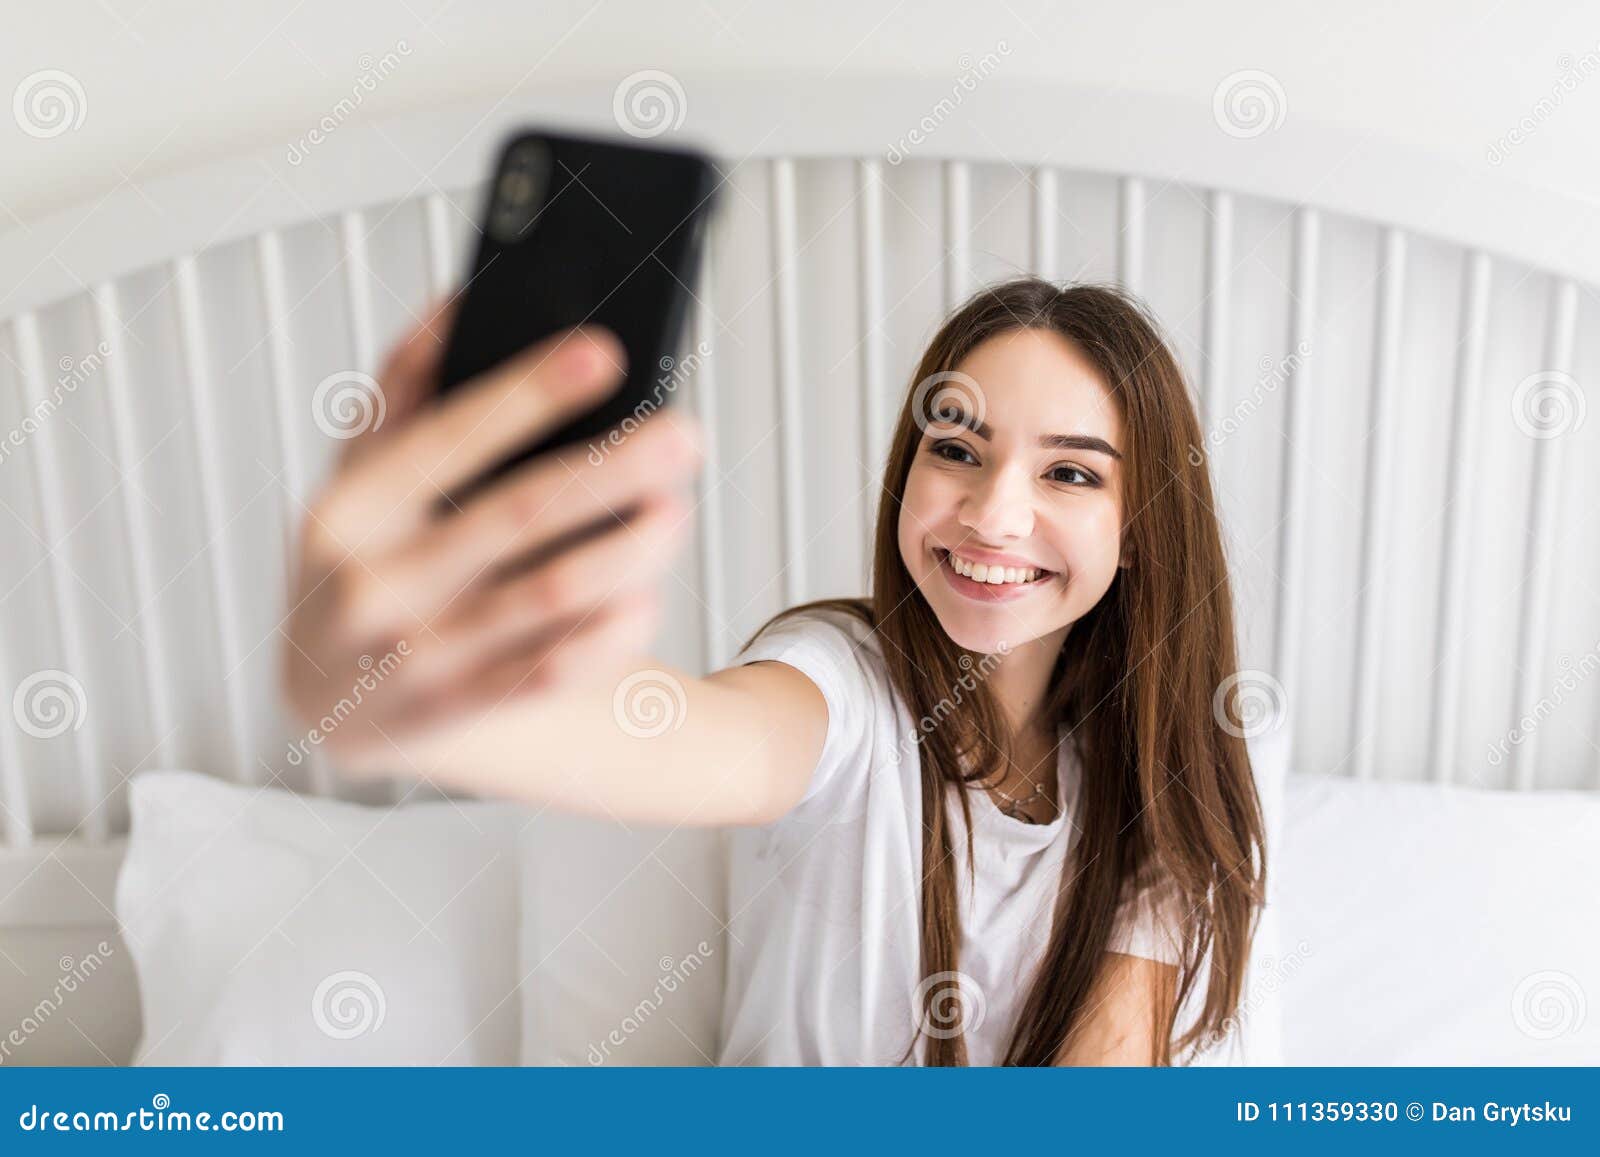 home girlfriend making selfy xxx photo